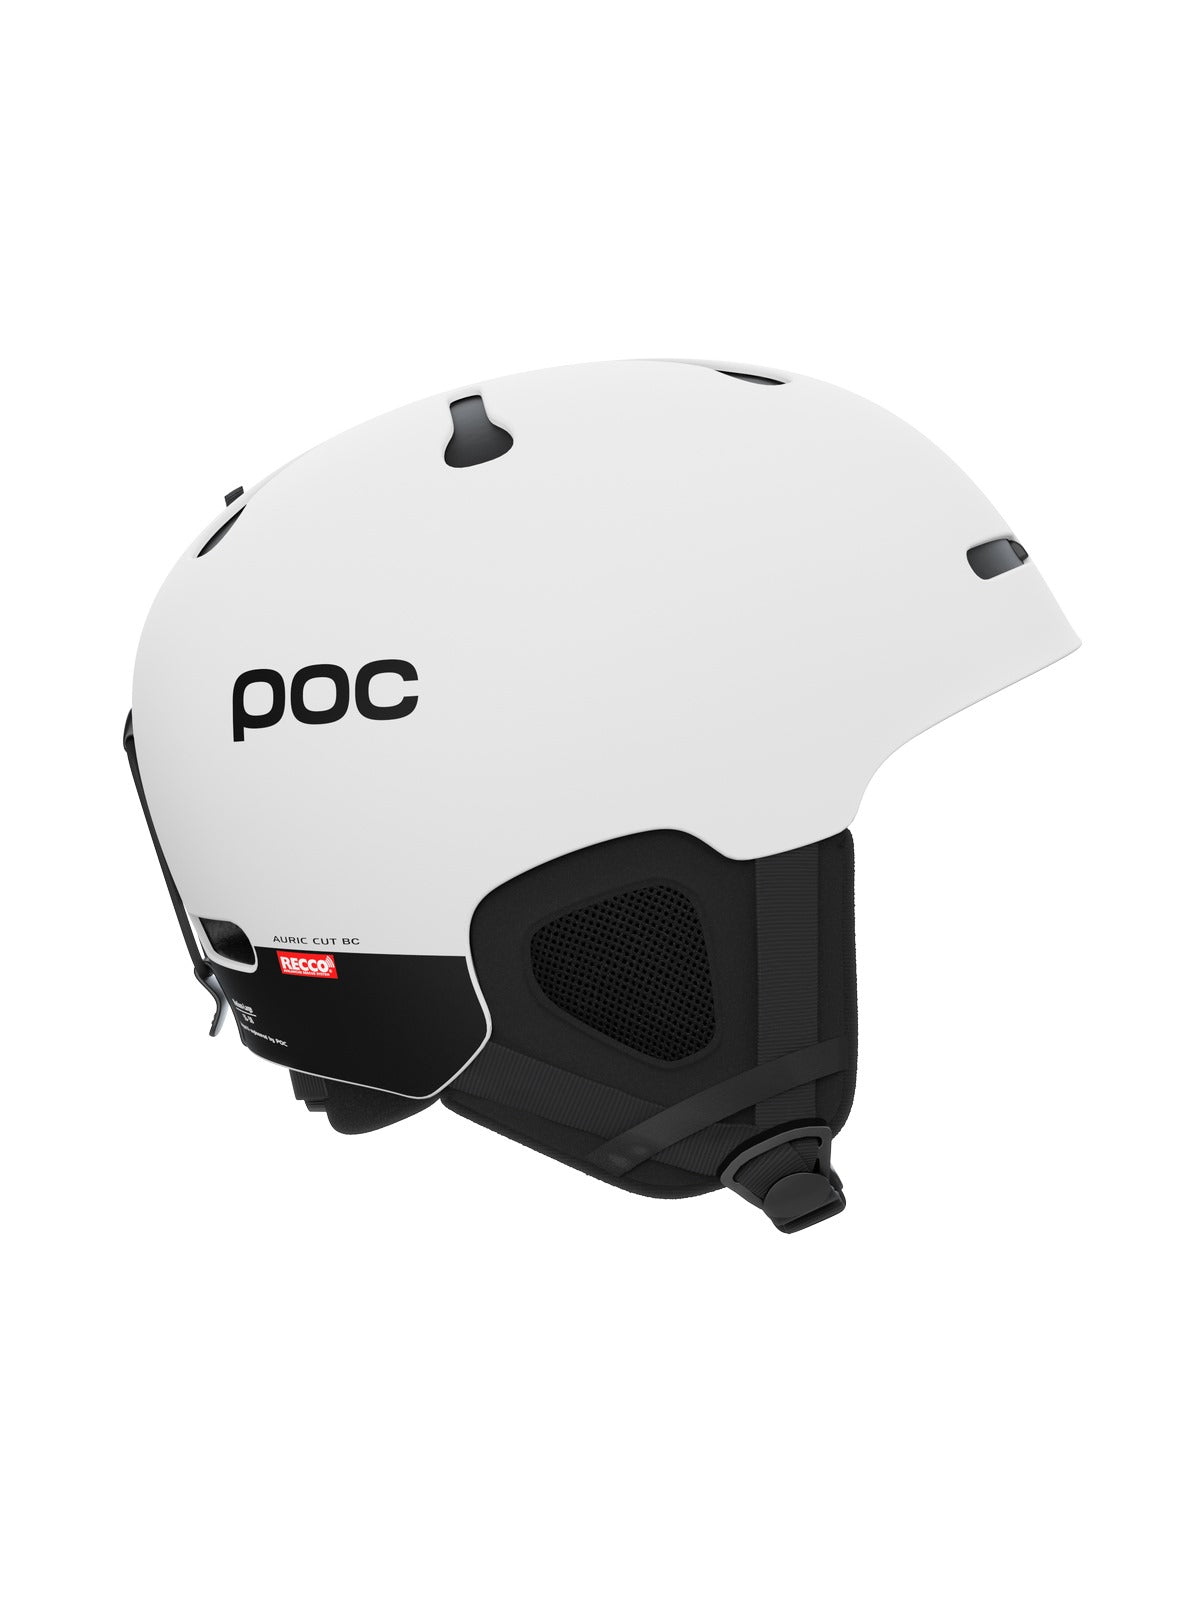 Kask narciarski POC Auric Cut BC MIPS - Hyd. White Matt